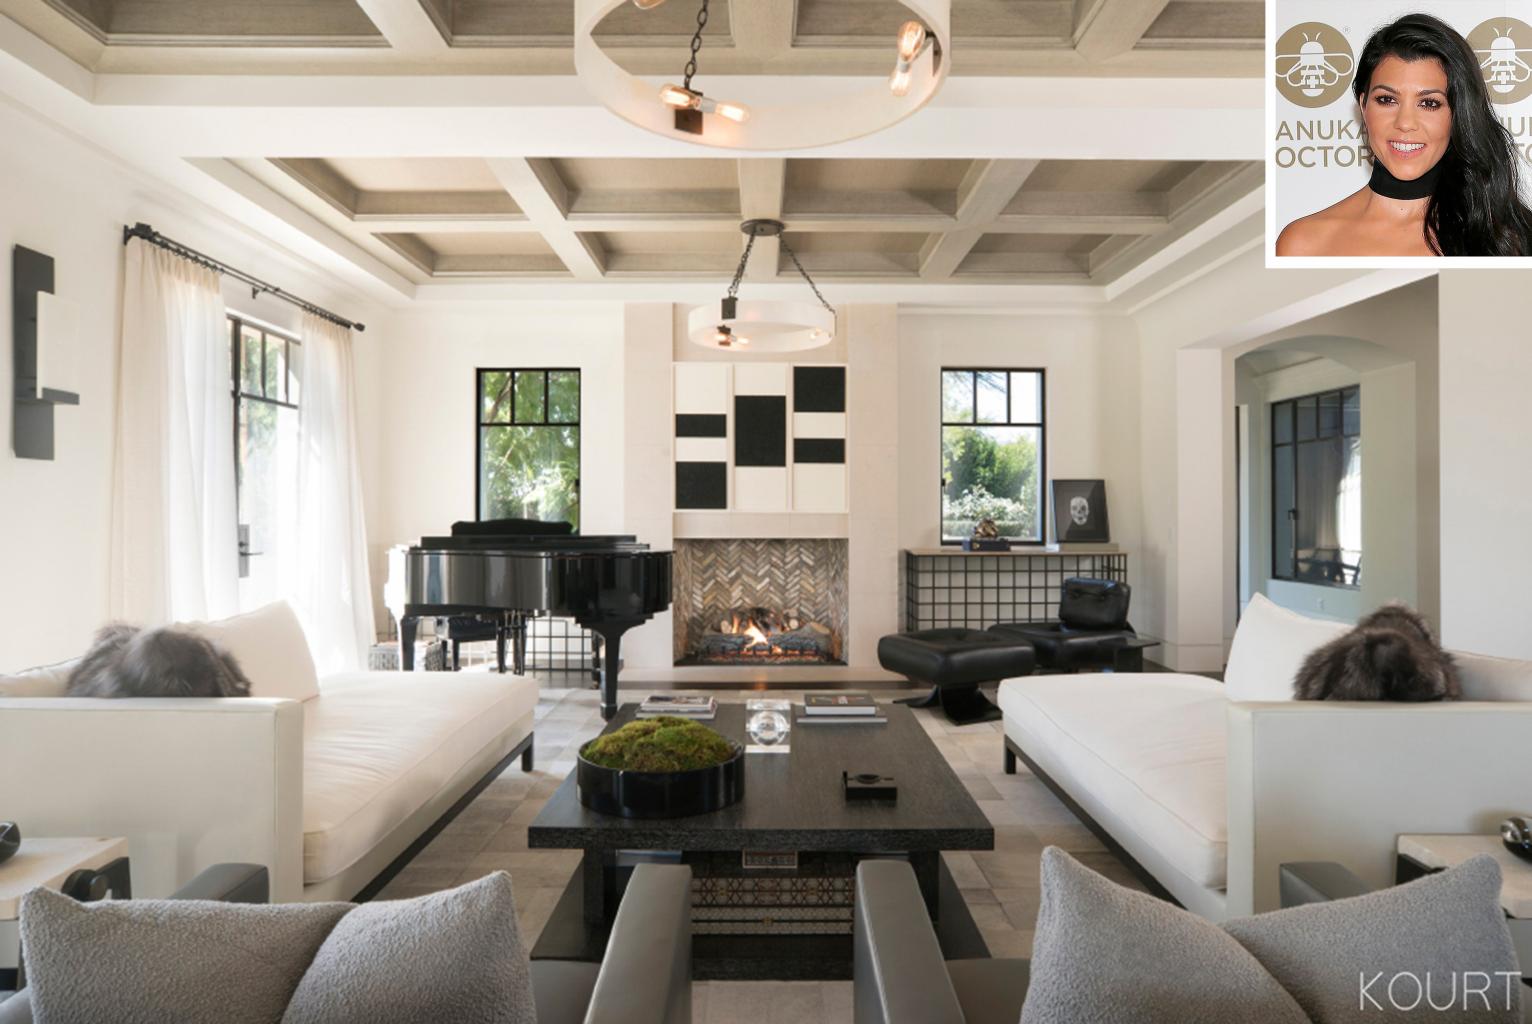 Kourtney Kardashian       's Stunning Living Room Includes a Sentimental       '  and Huge       '  Present from Kris Jenner